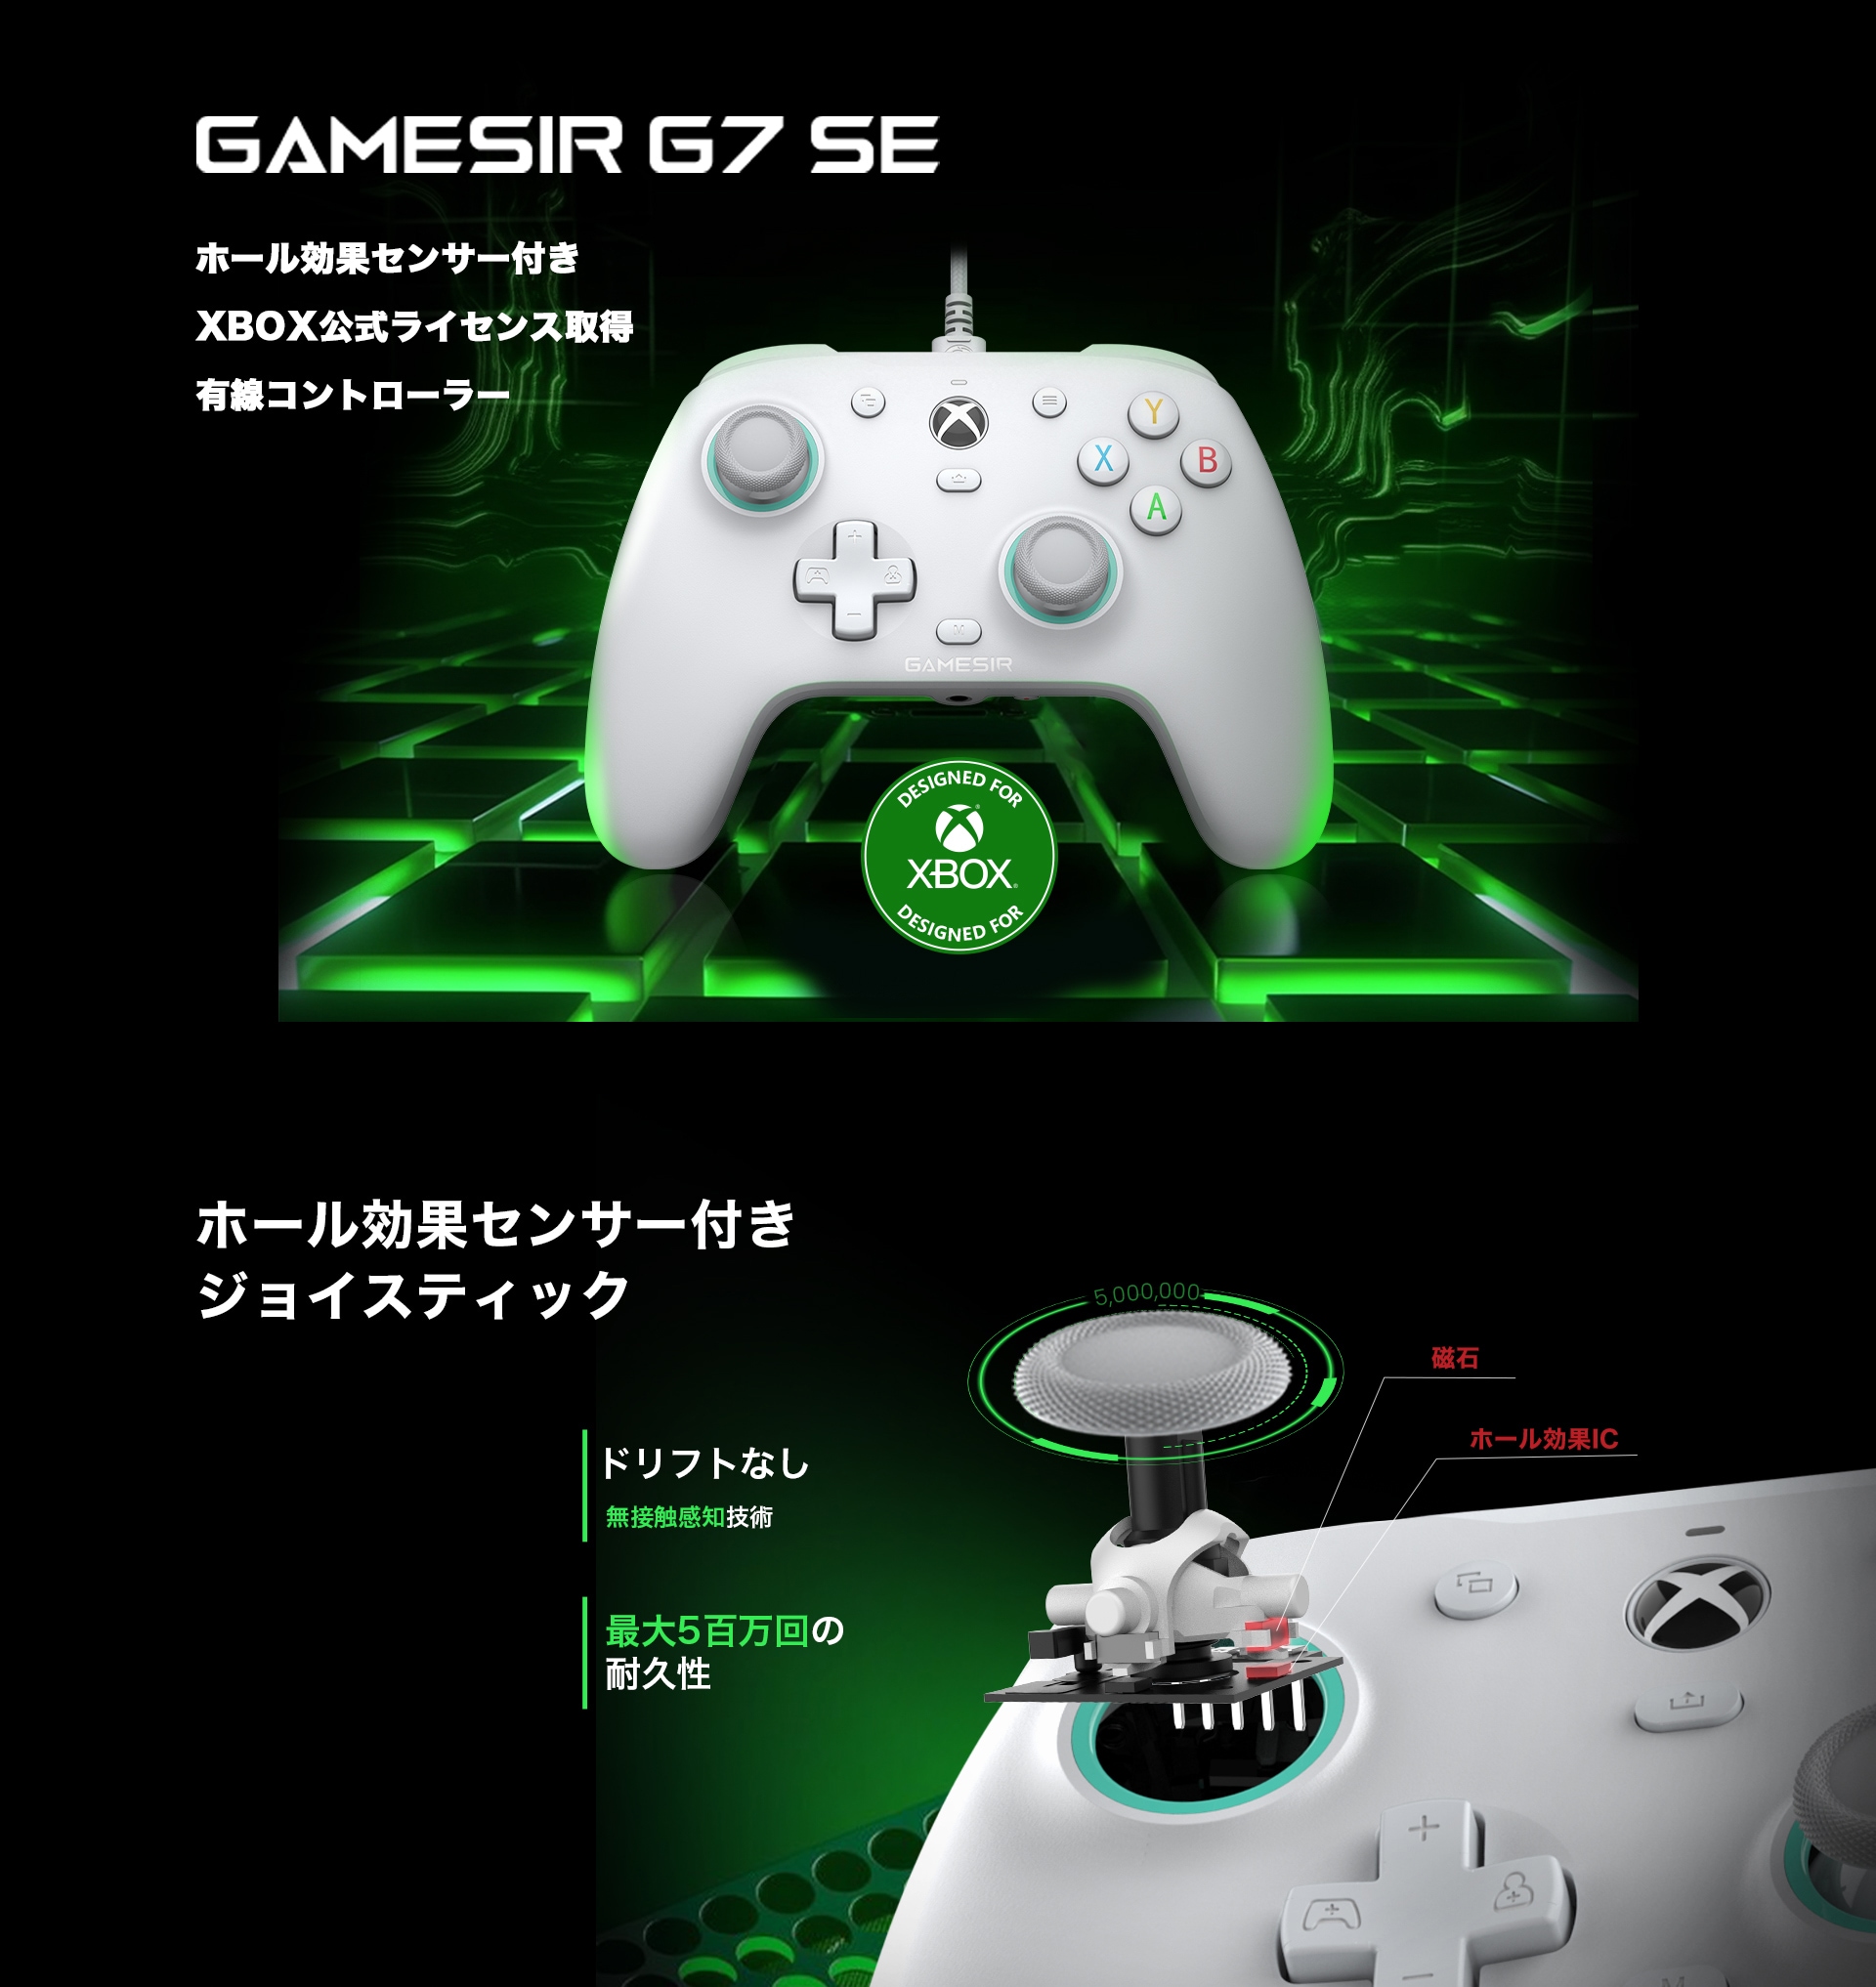 GameSir G7 SE Xboxライセンス品 Xbox、Windows PC用有線コントローラー